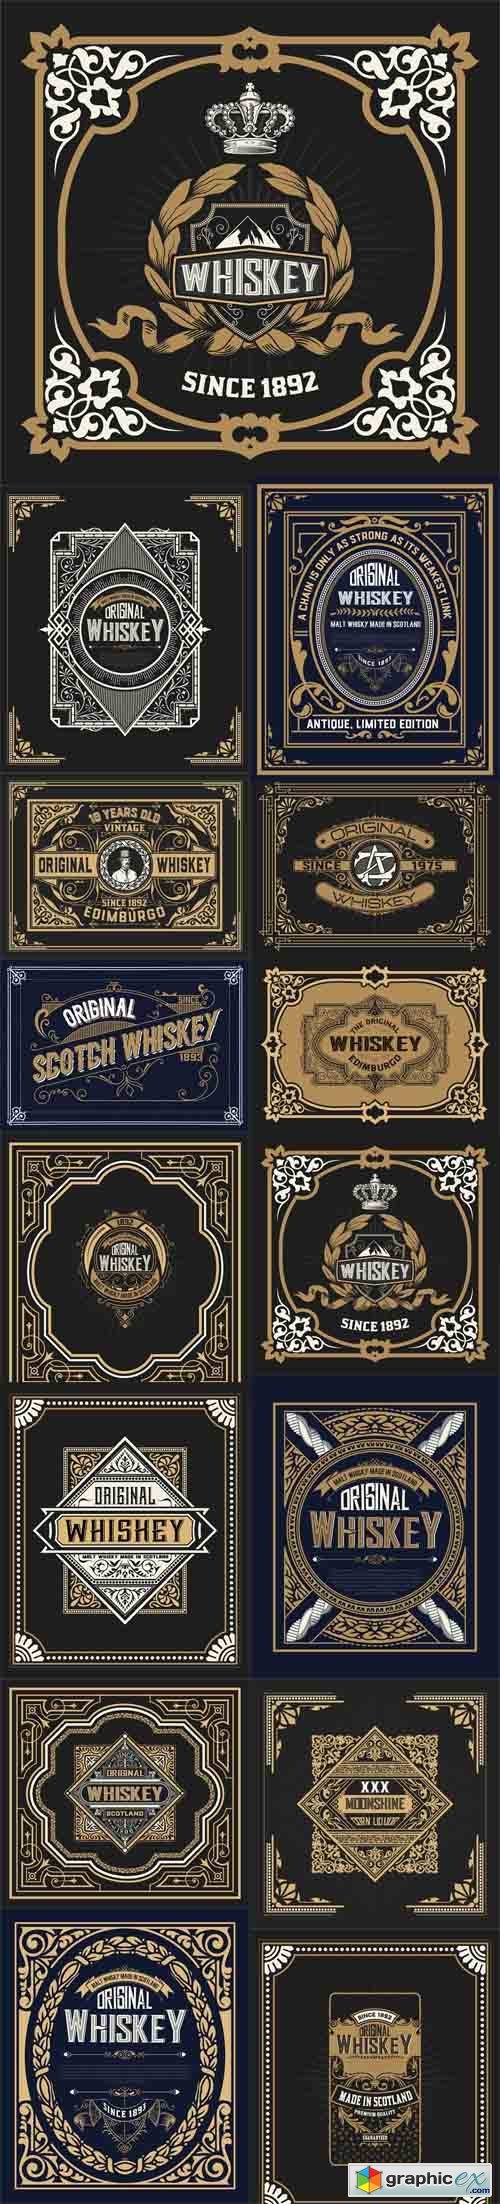 Old label design for Whiskey and Wine label. Restaurant banner